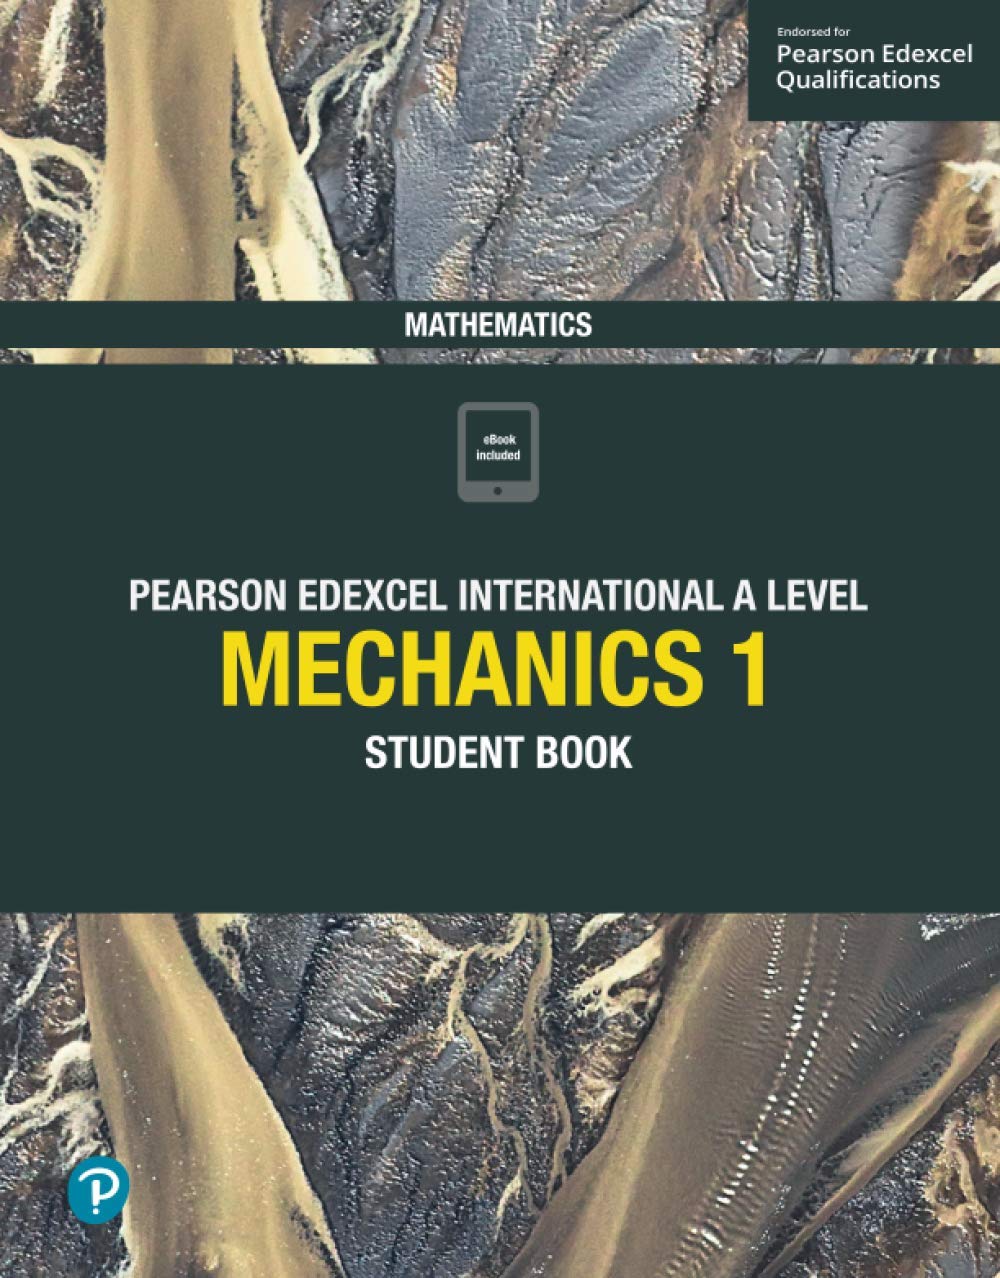 Featured image for “Pearson Edexcel International A Level Mathematics Mechanics 1 Student Book”